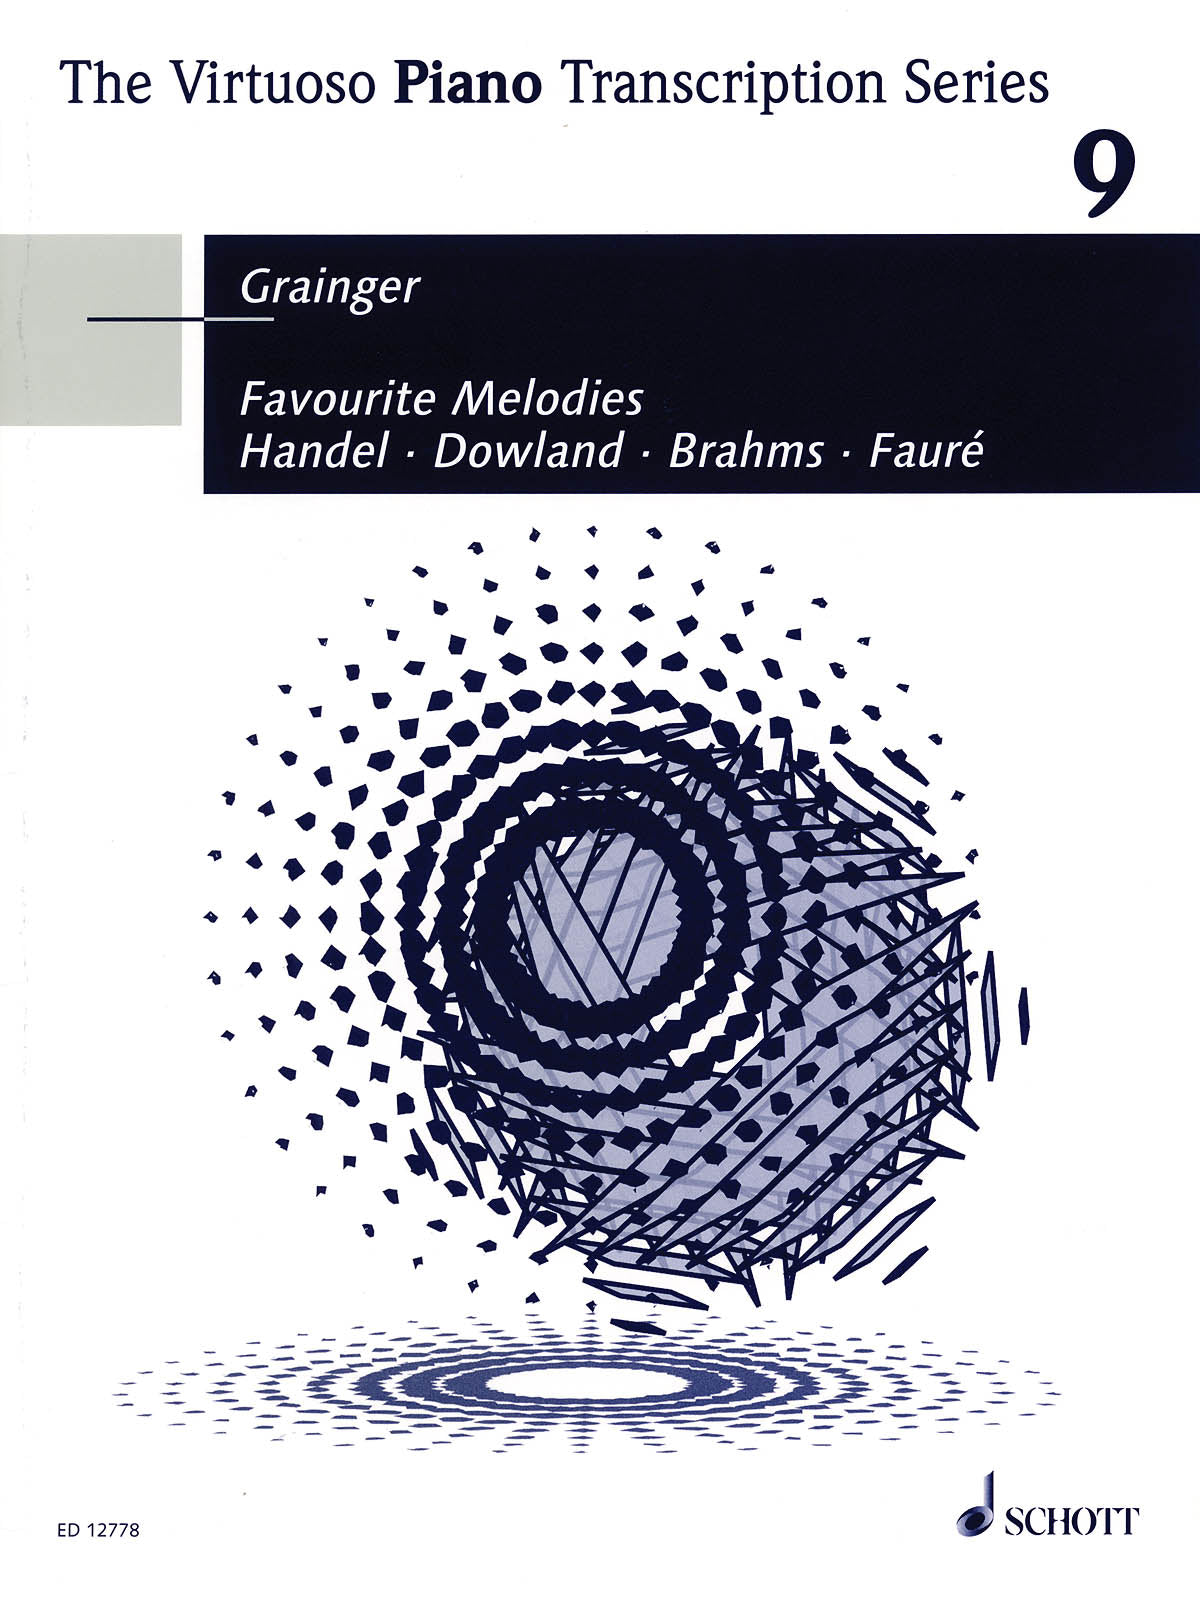 Grainger: Favorite Melodies